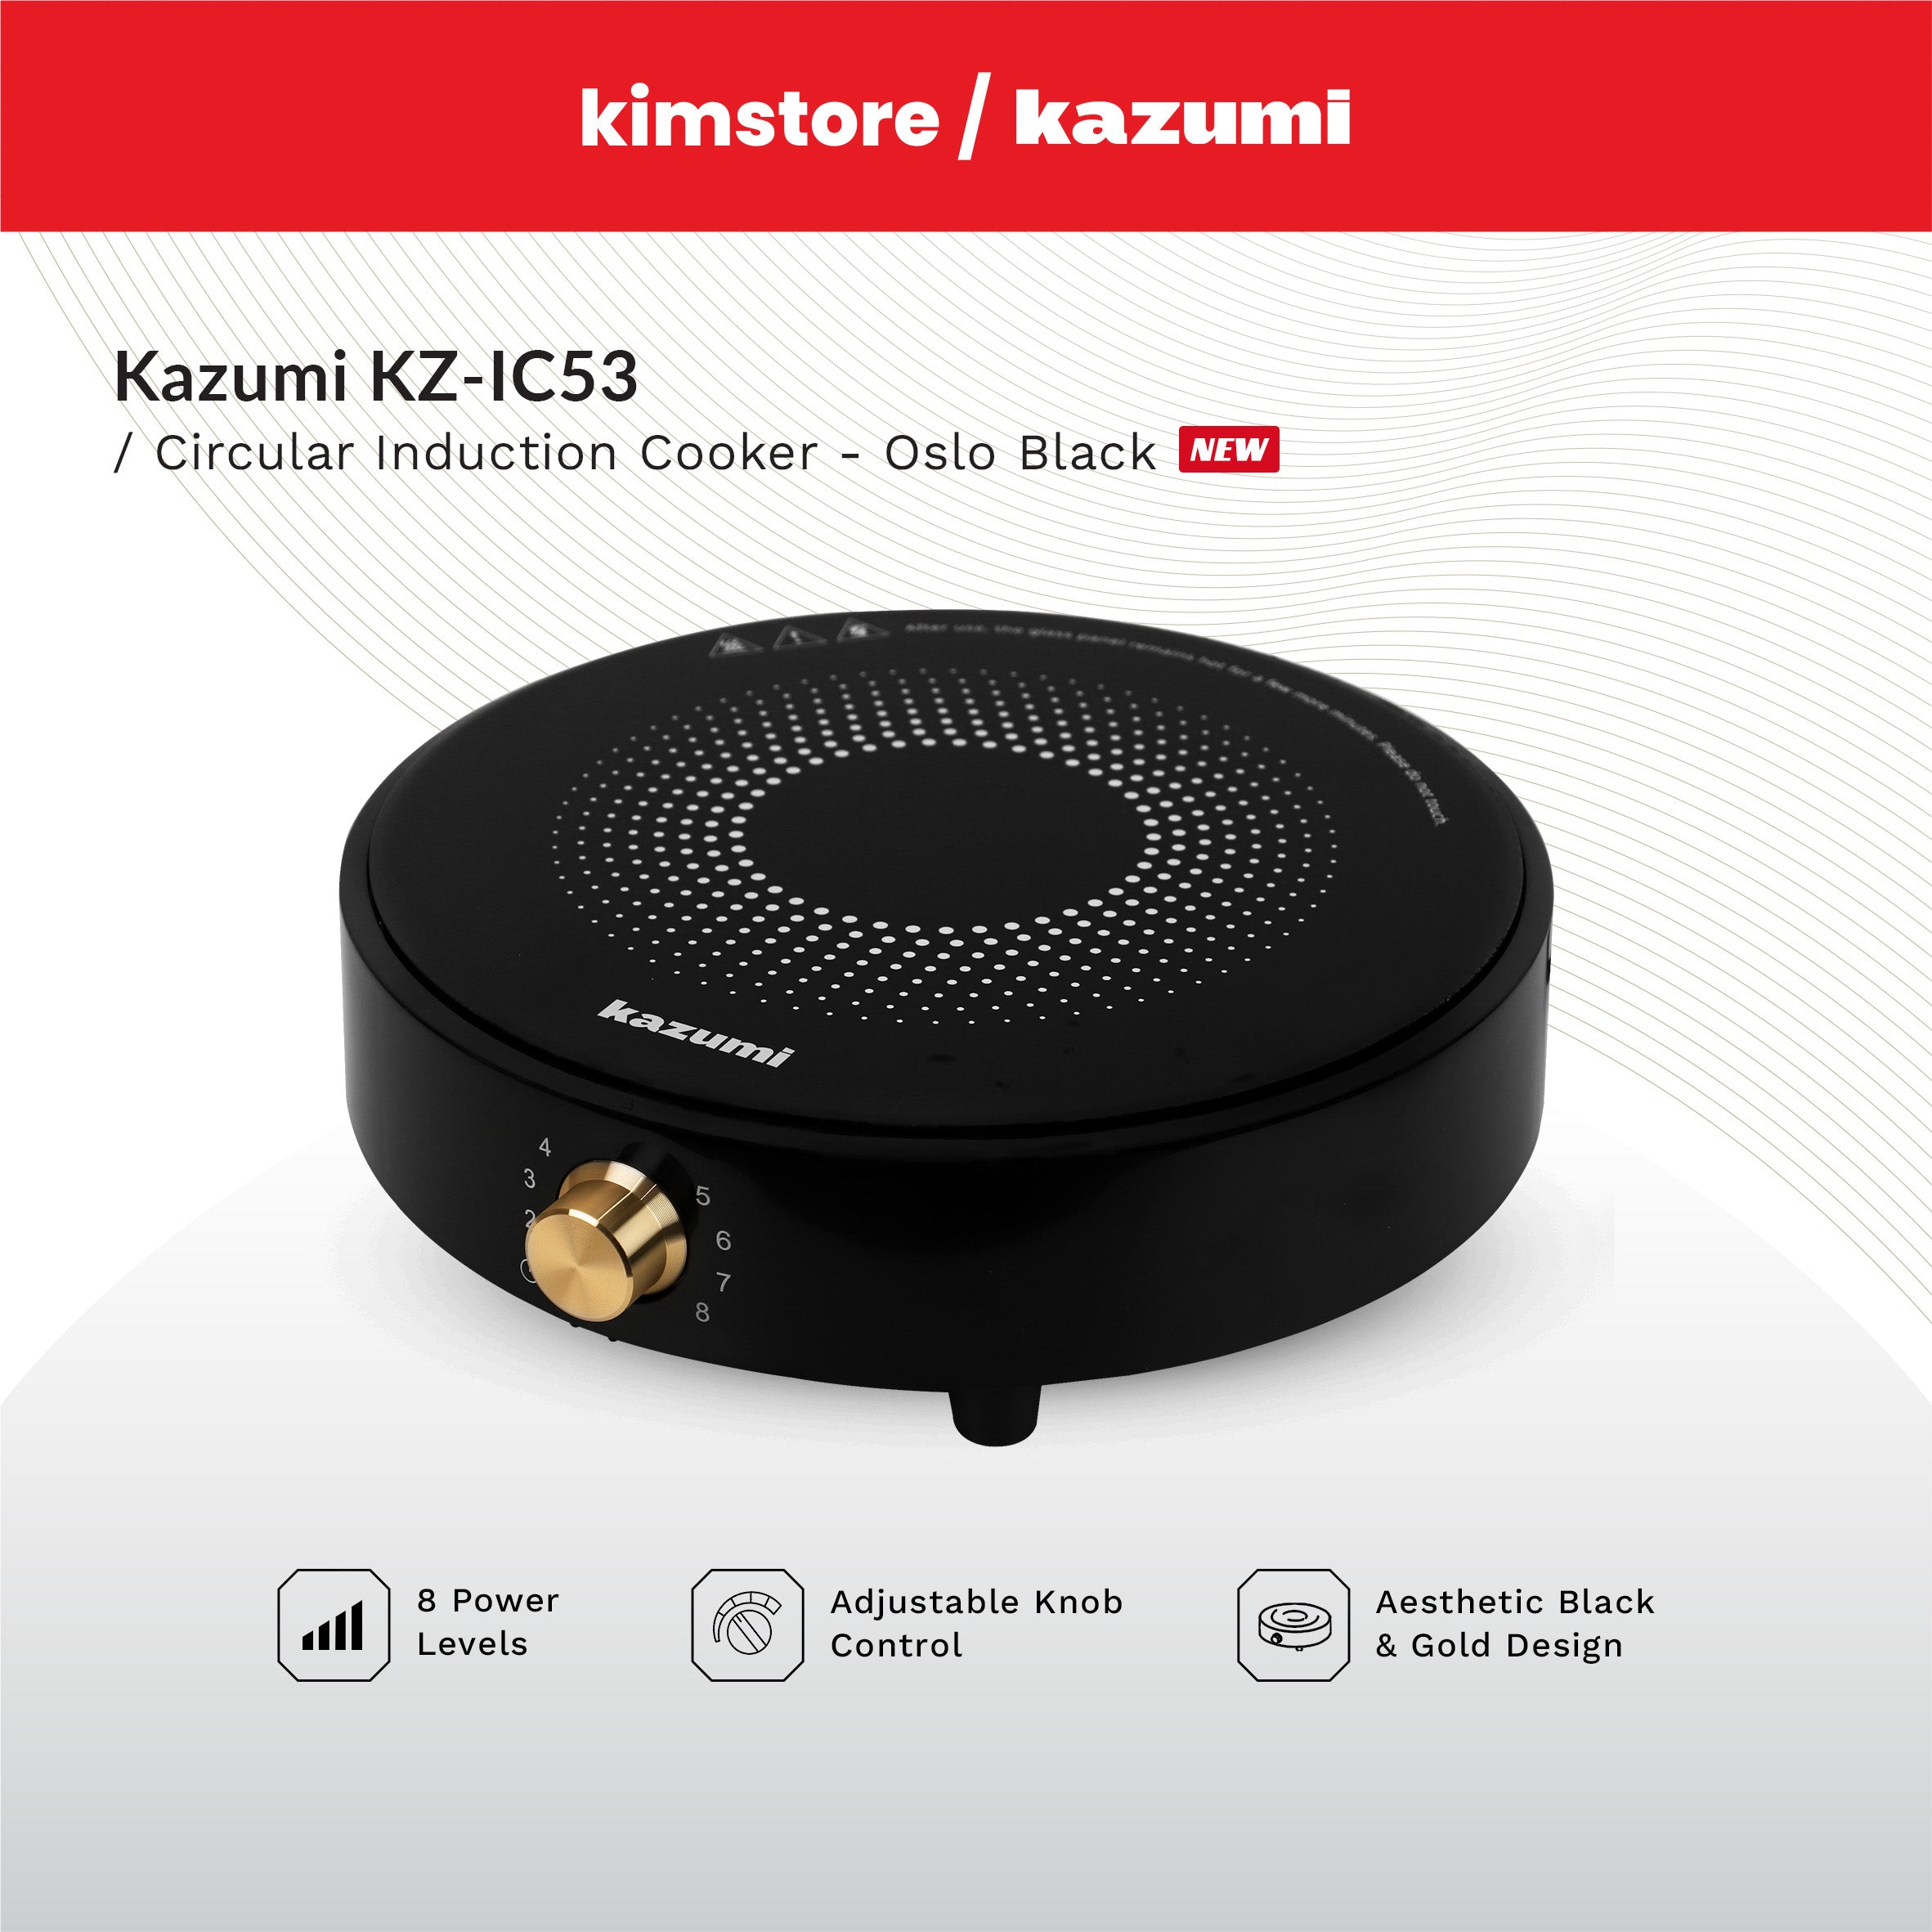 Kazumi KZ-IC53 Circular Induction Cooker